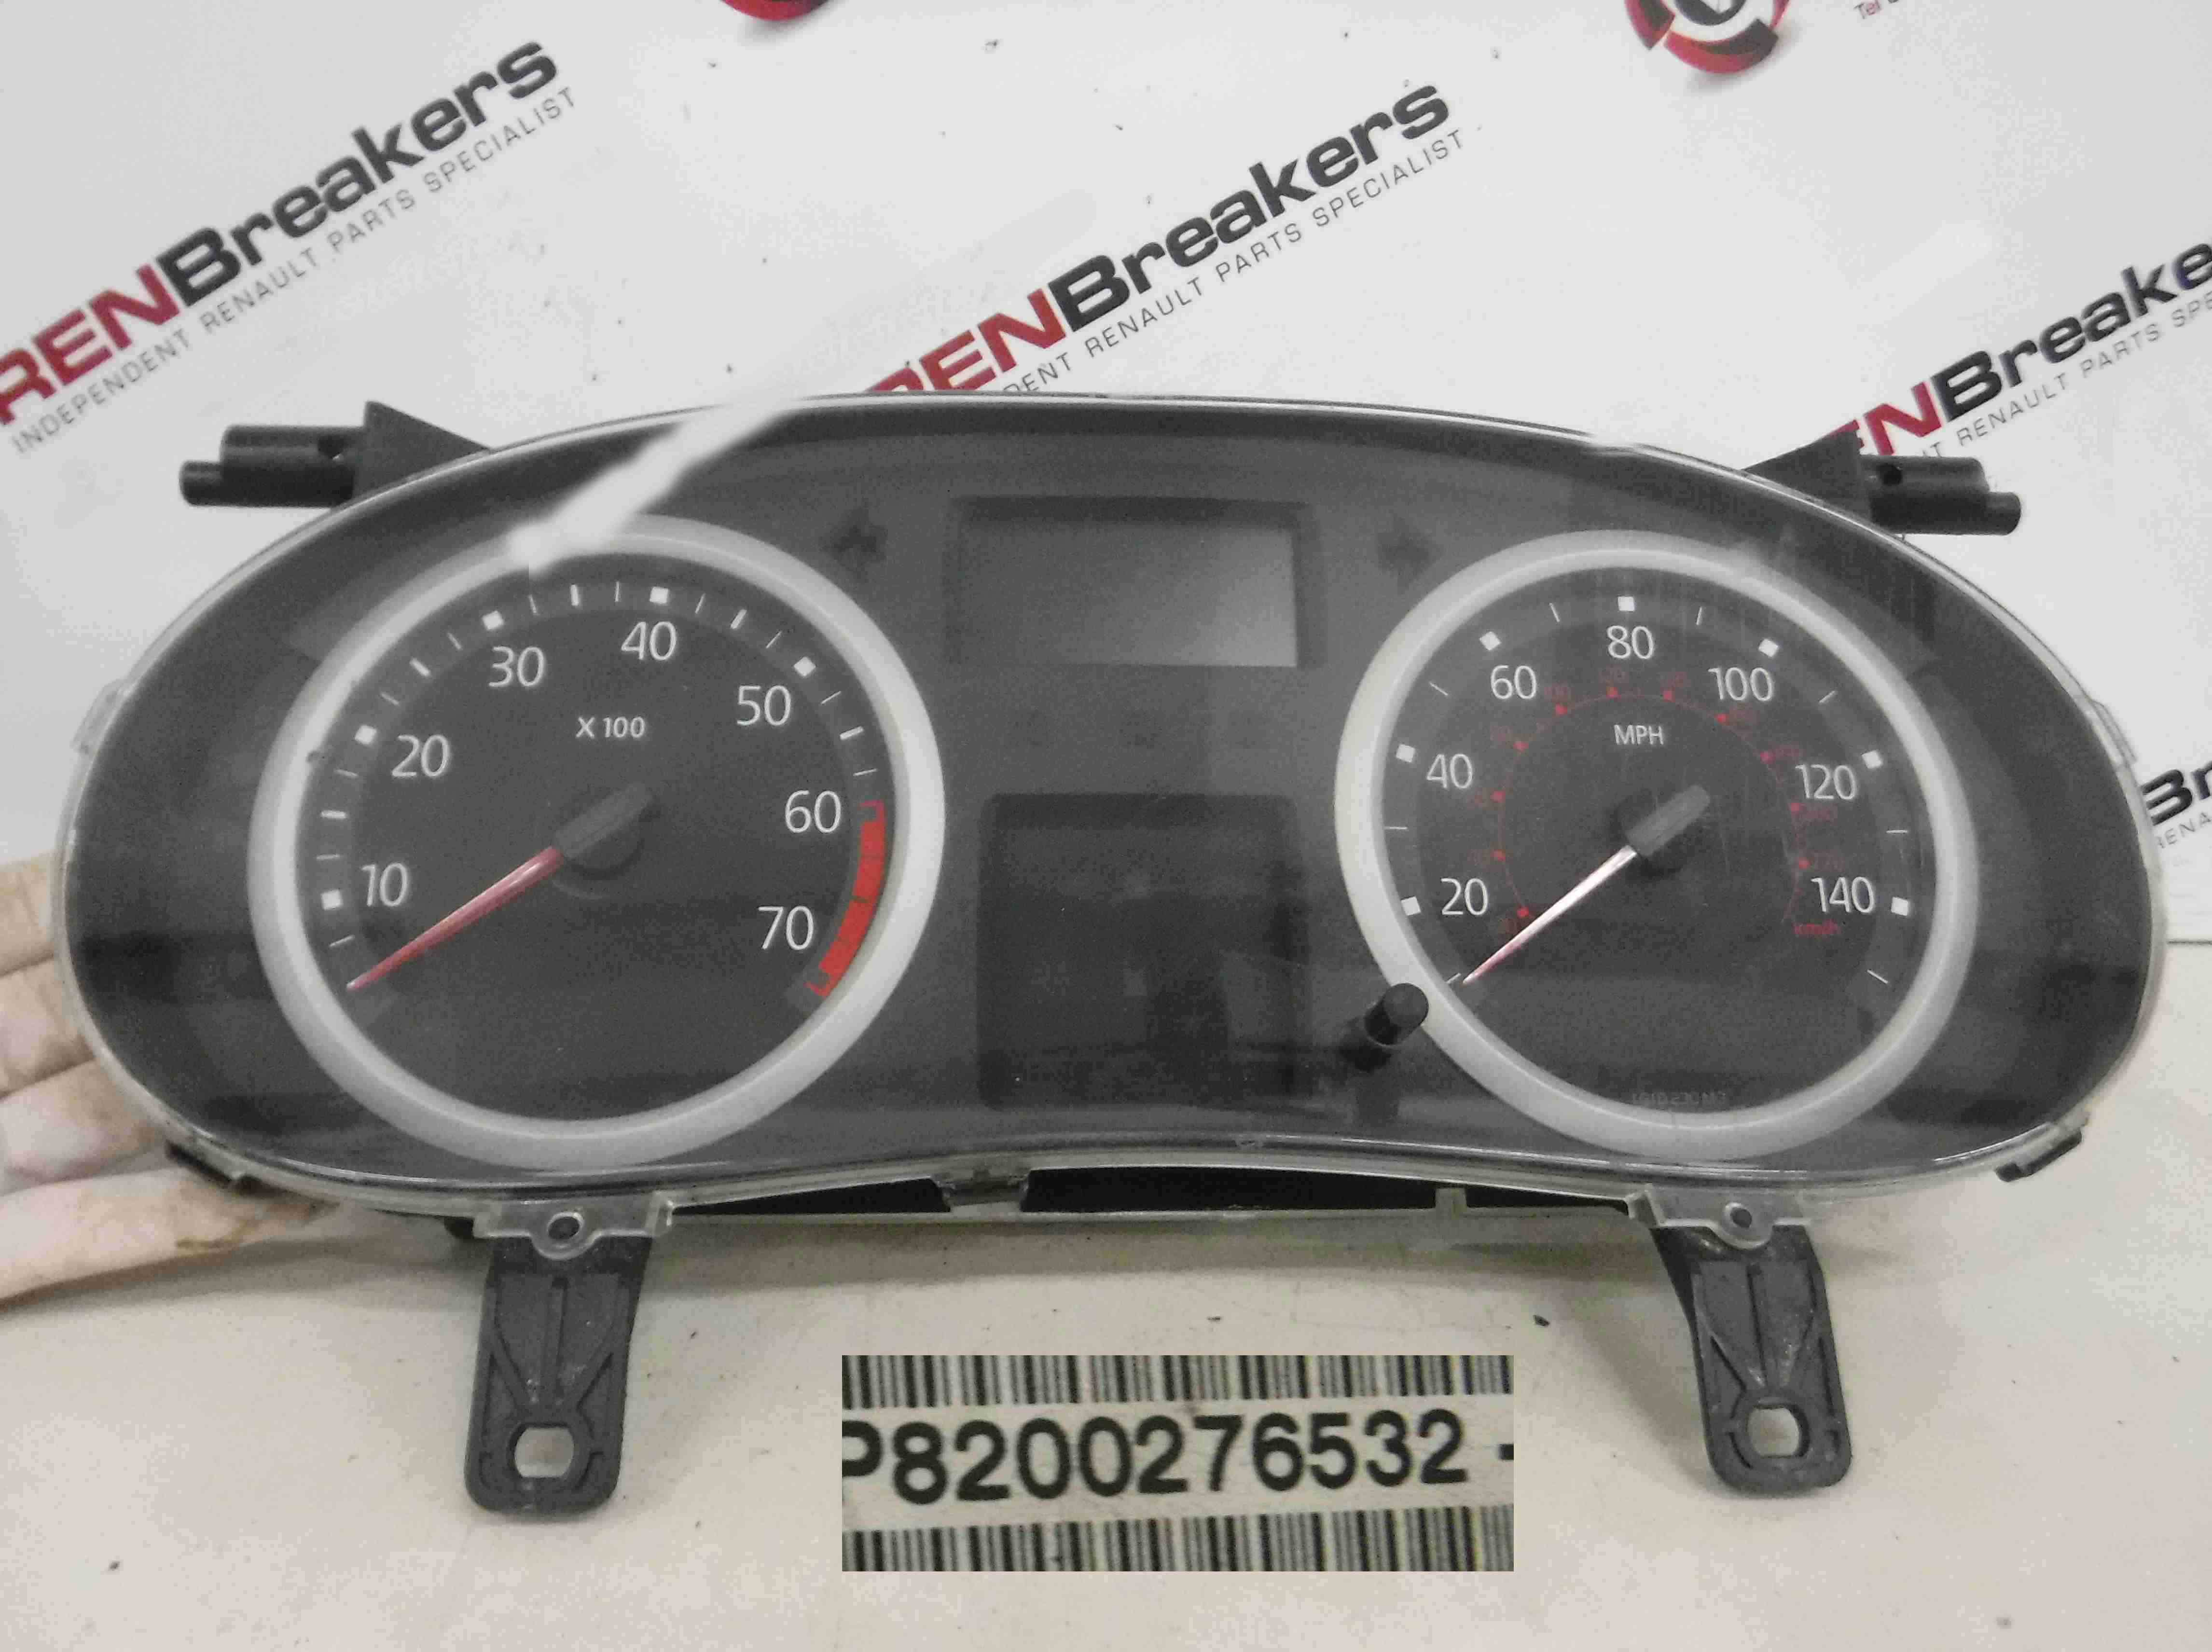 Renault Clio MK2 2001-2006 Instrument Panel Dials Gauges Clocks 133K 8200276532